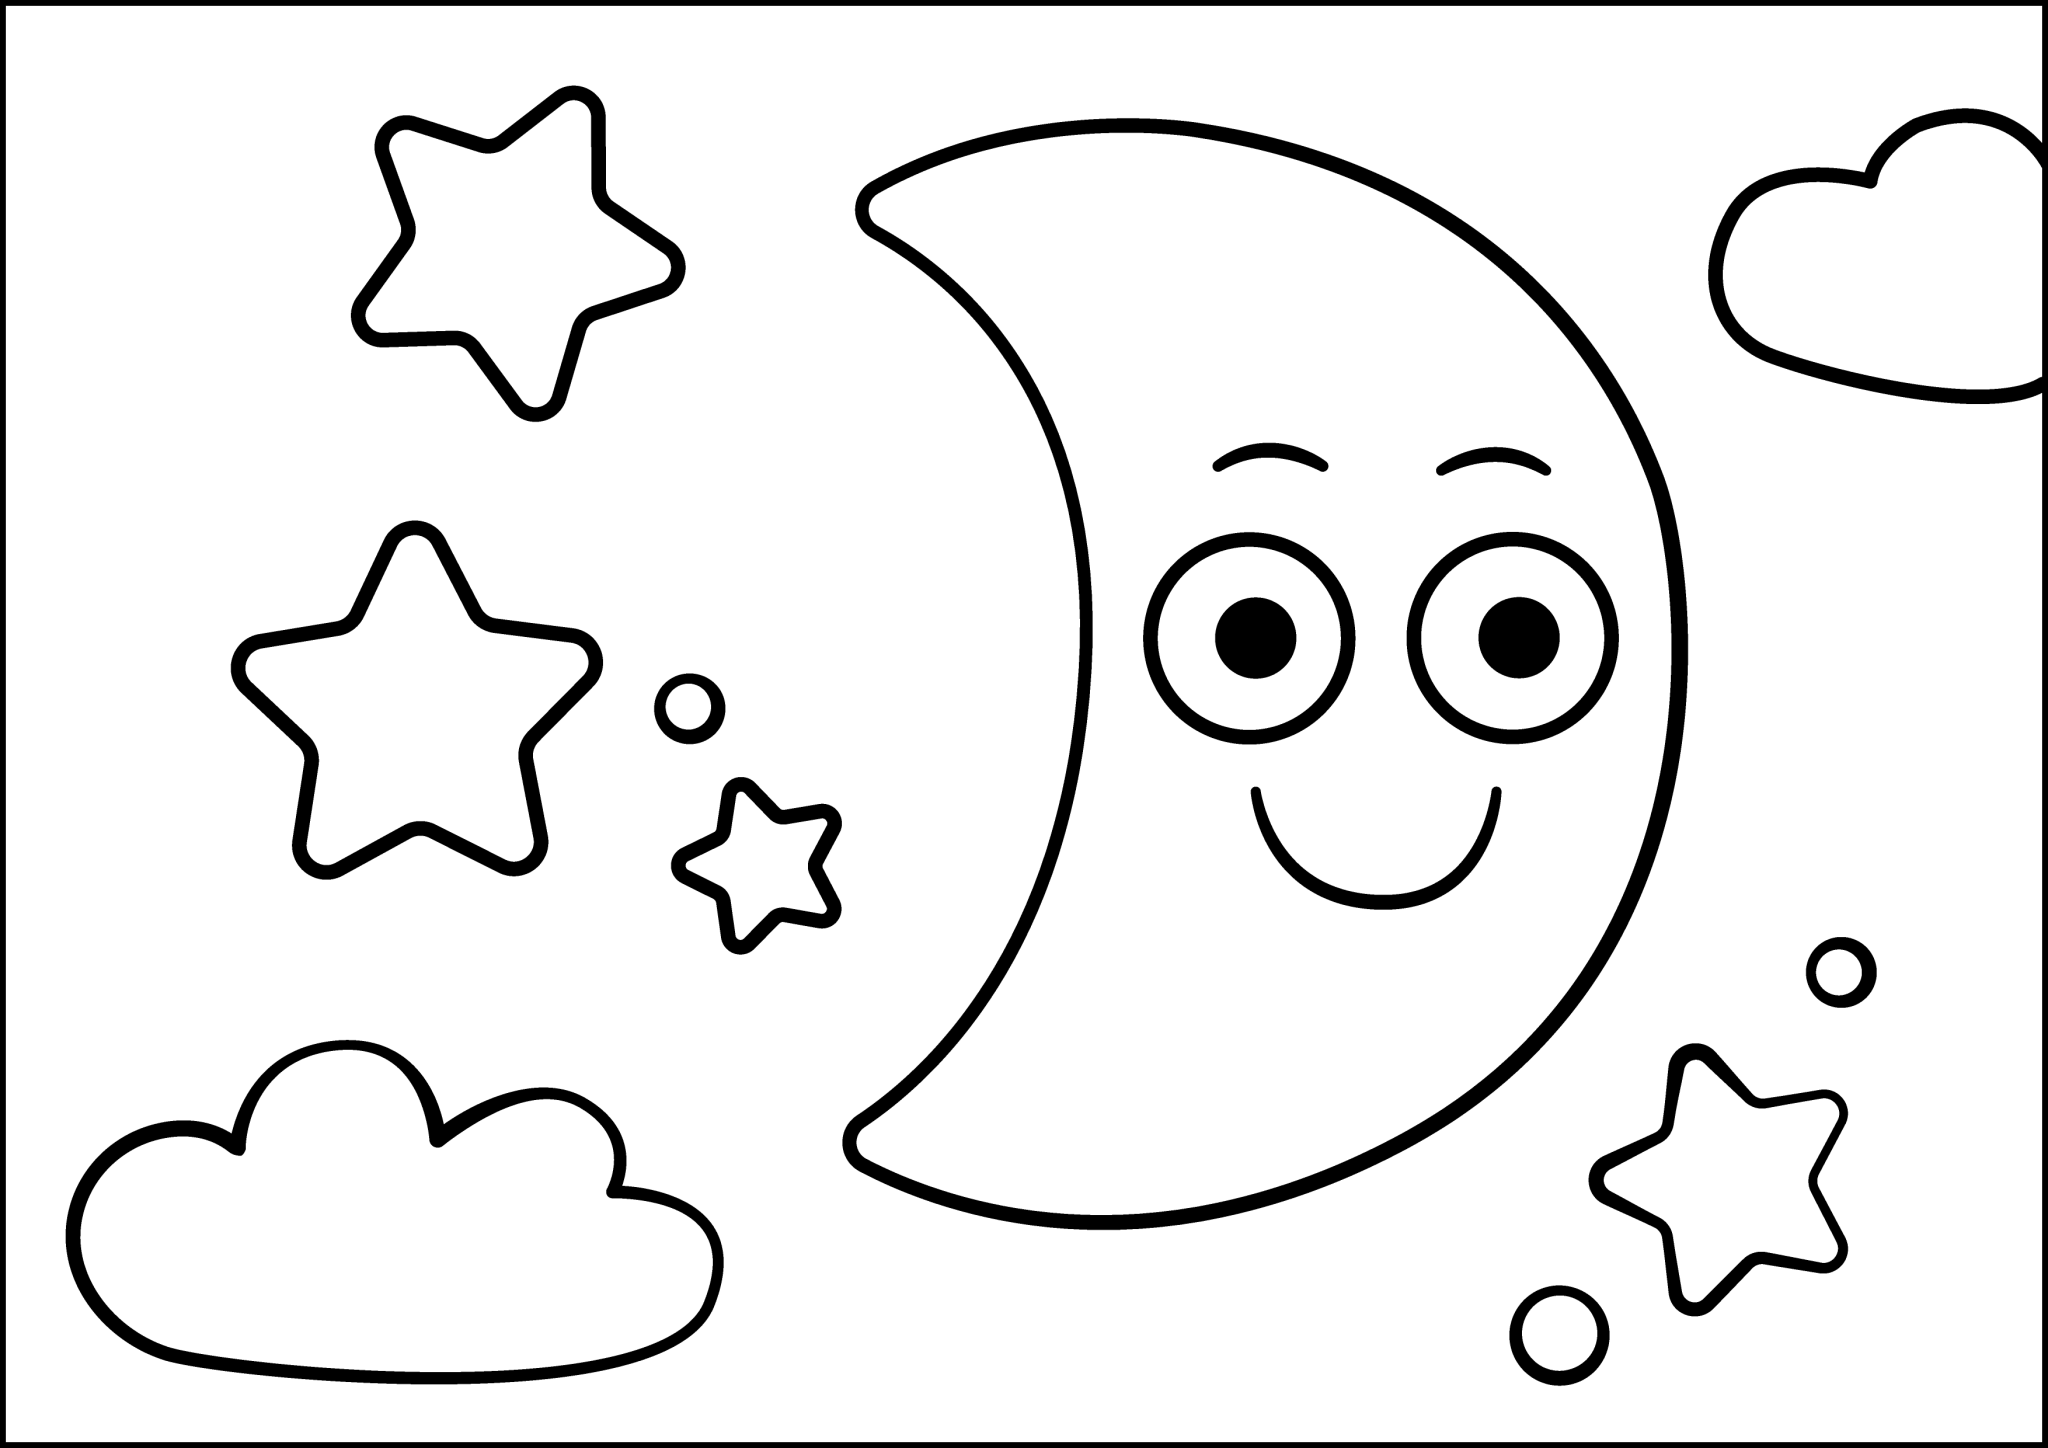 Moon shapes. Раскраски для детей фигуры.